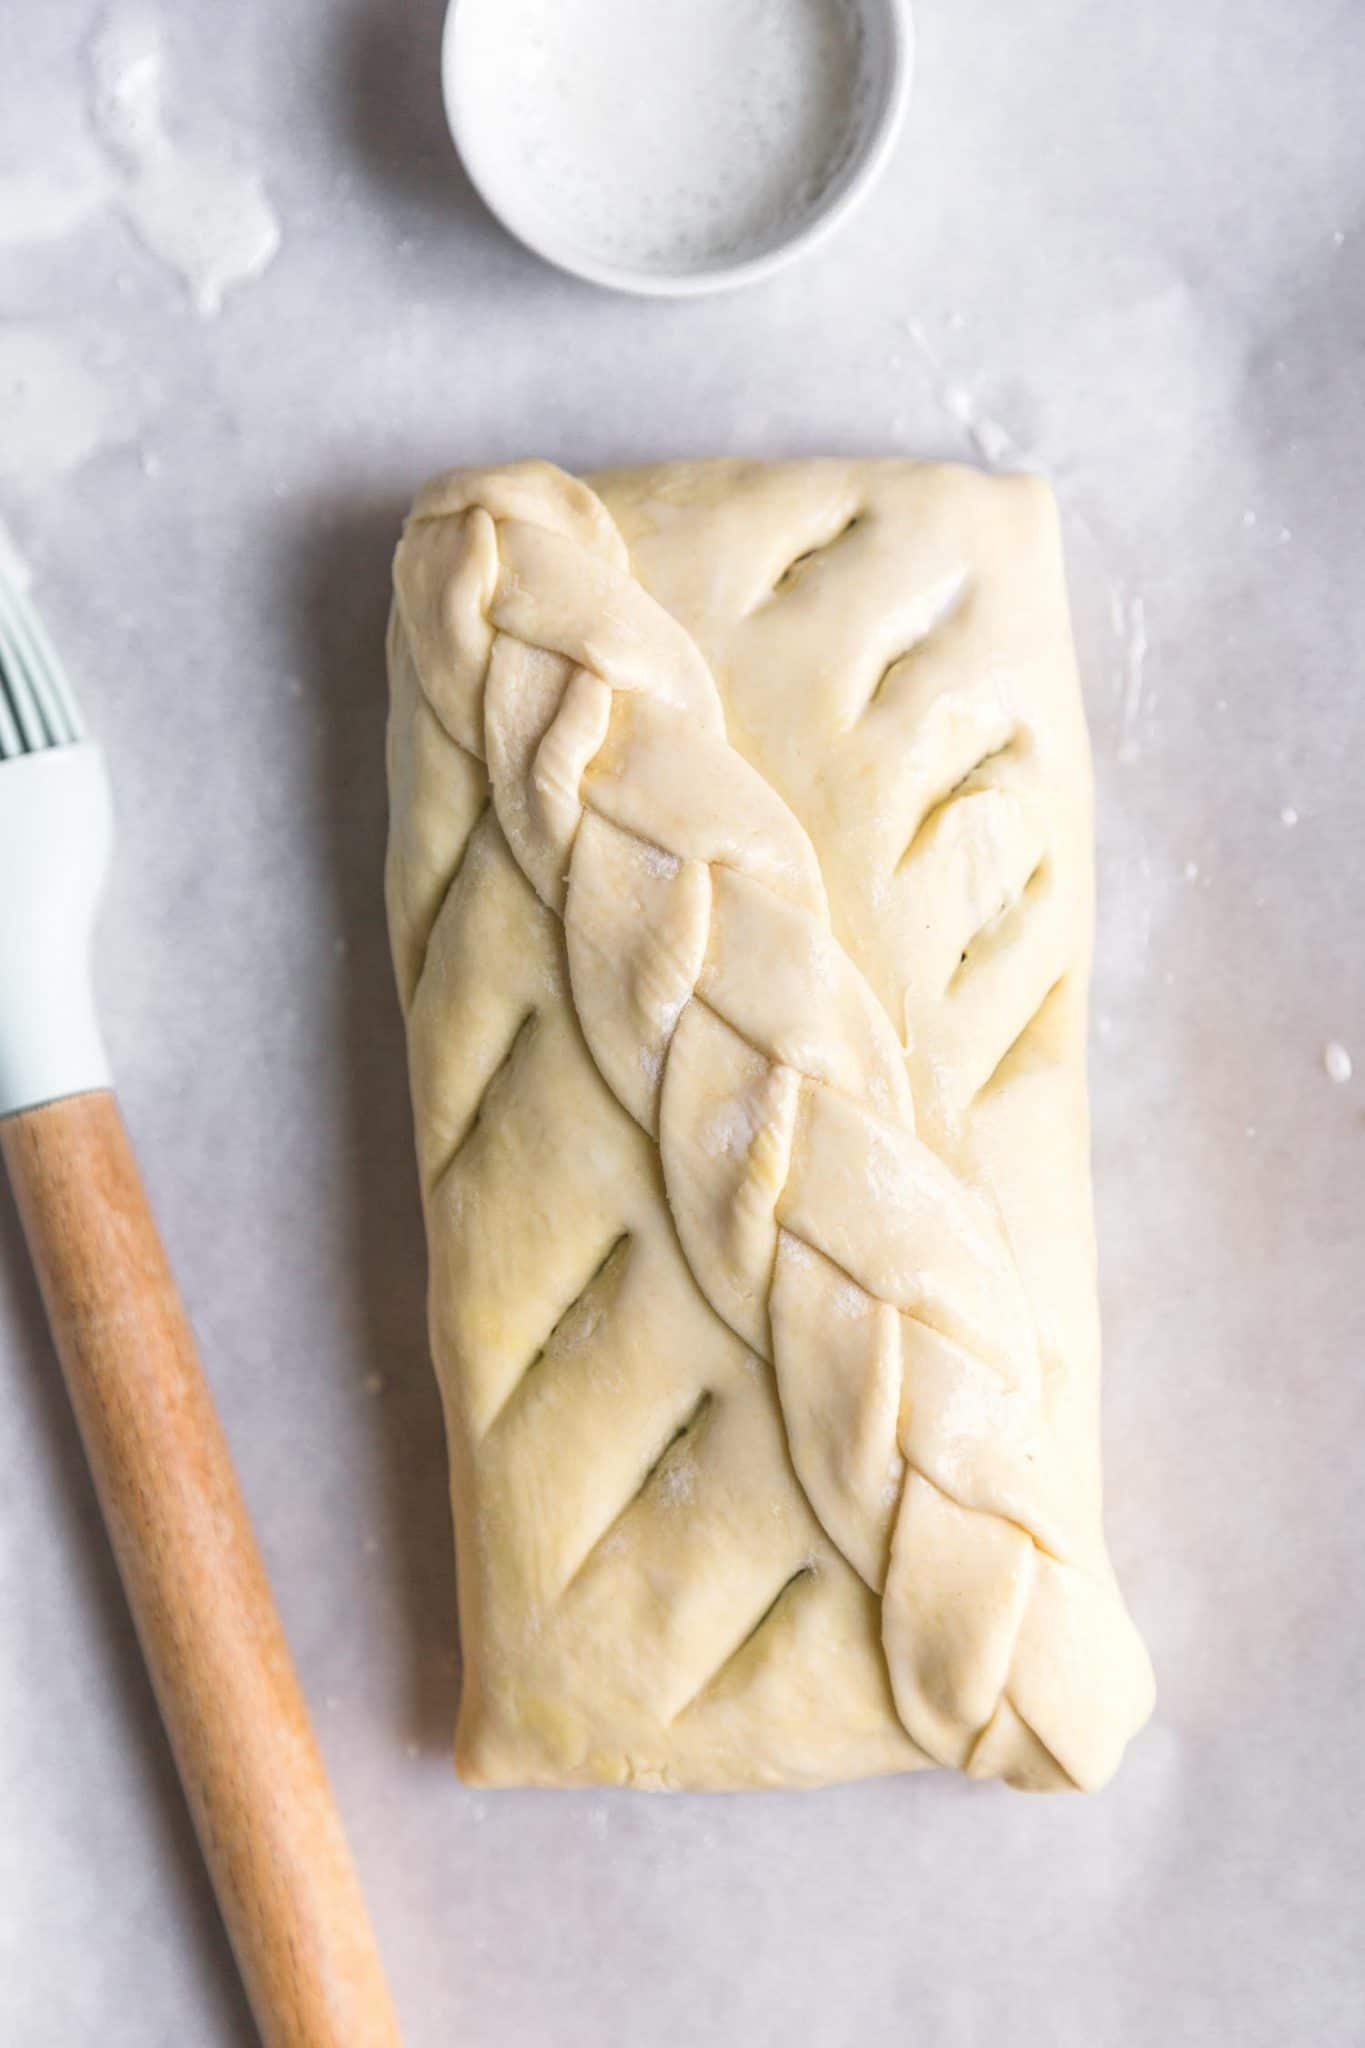 puff pastry thanksgiving centerpiece with elegant braid design